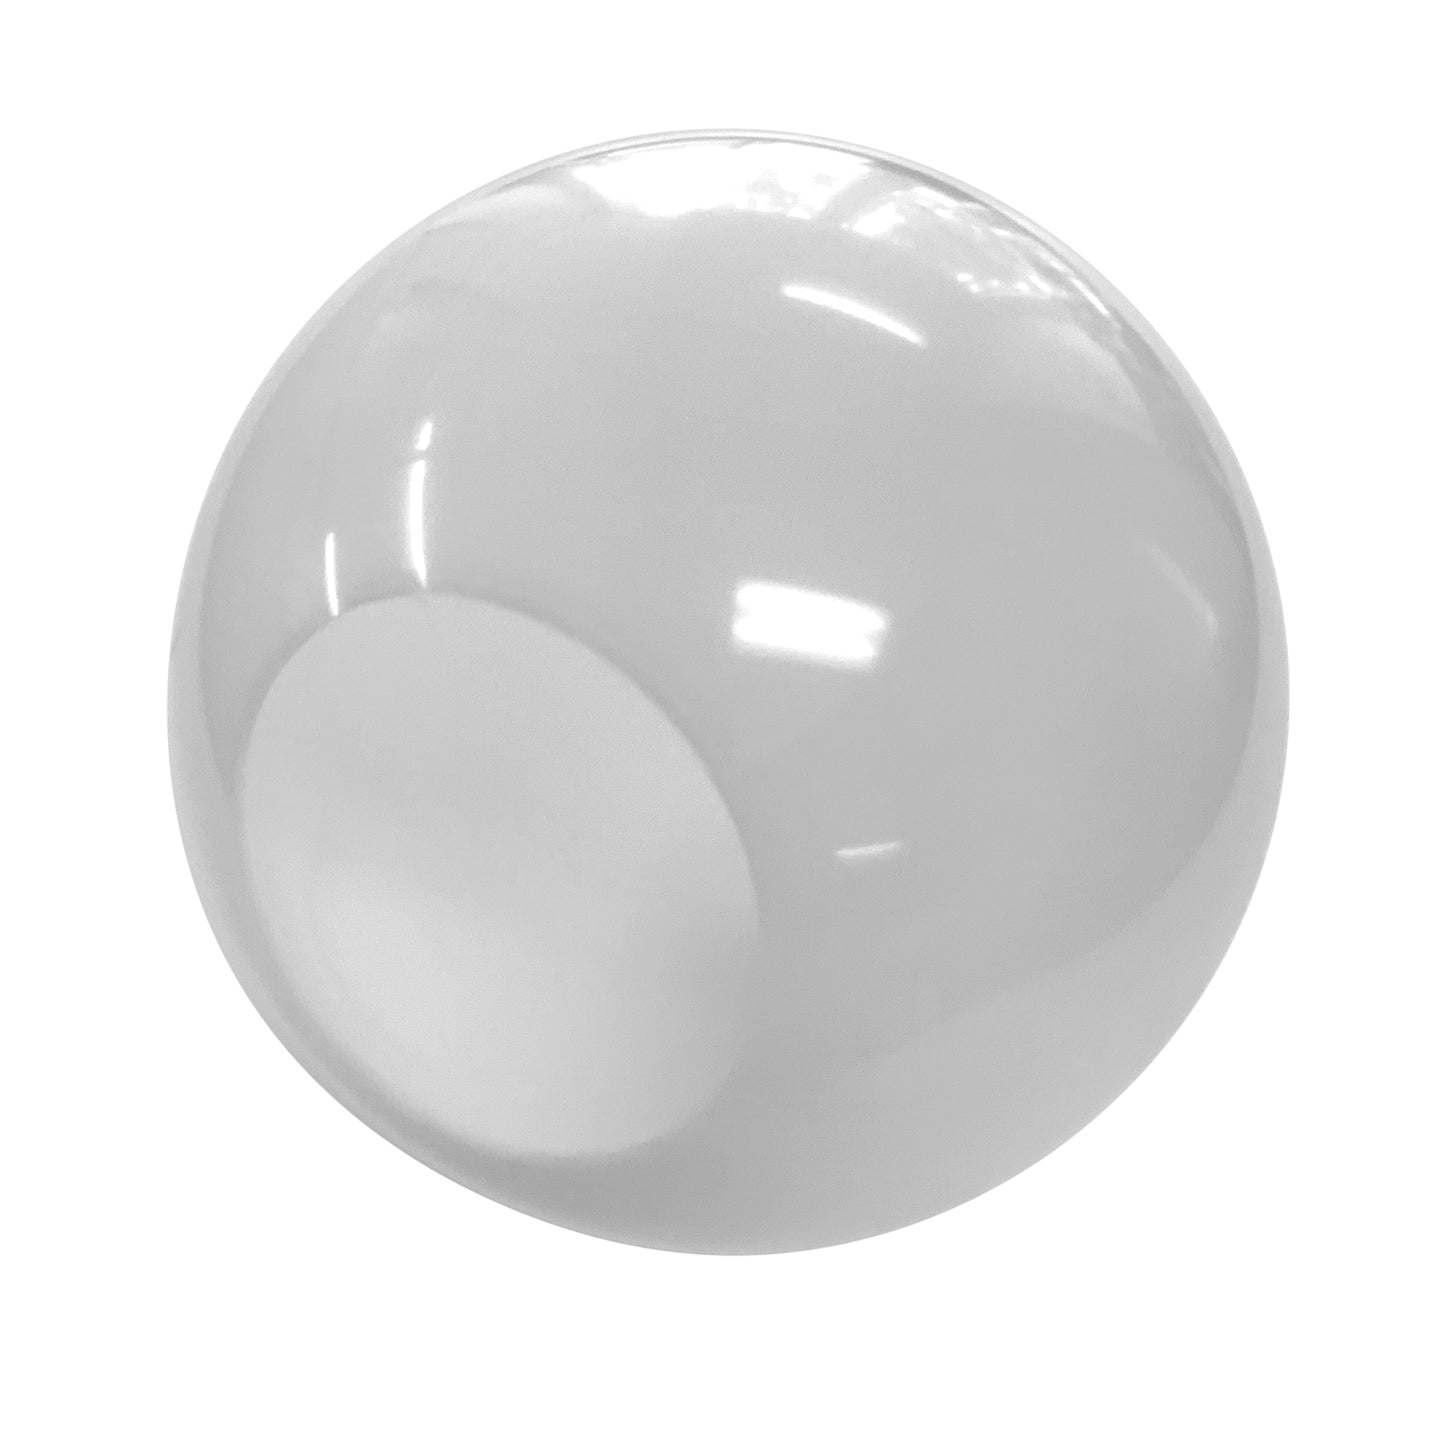 12" Diameter White Acrylic Globe with 5-1/4" Opening